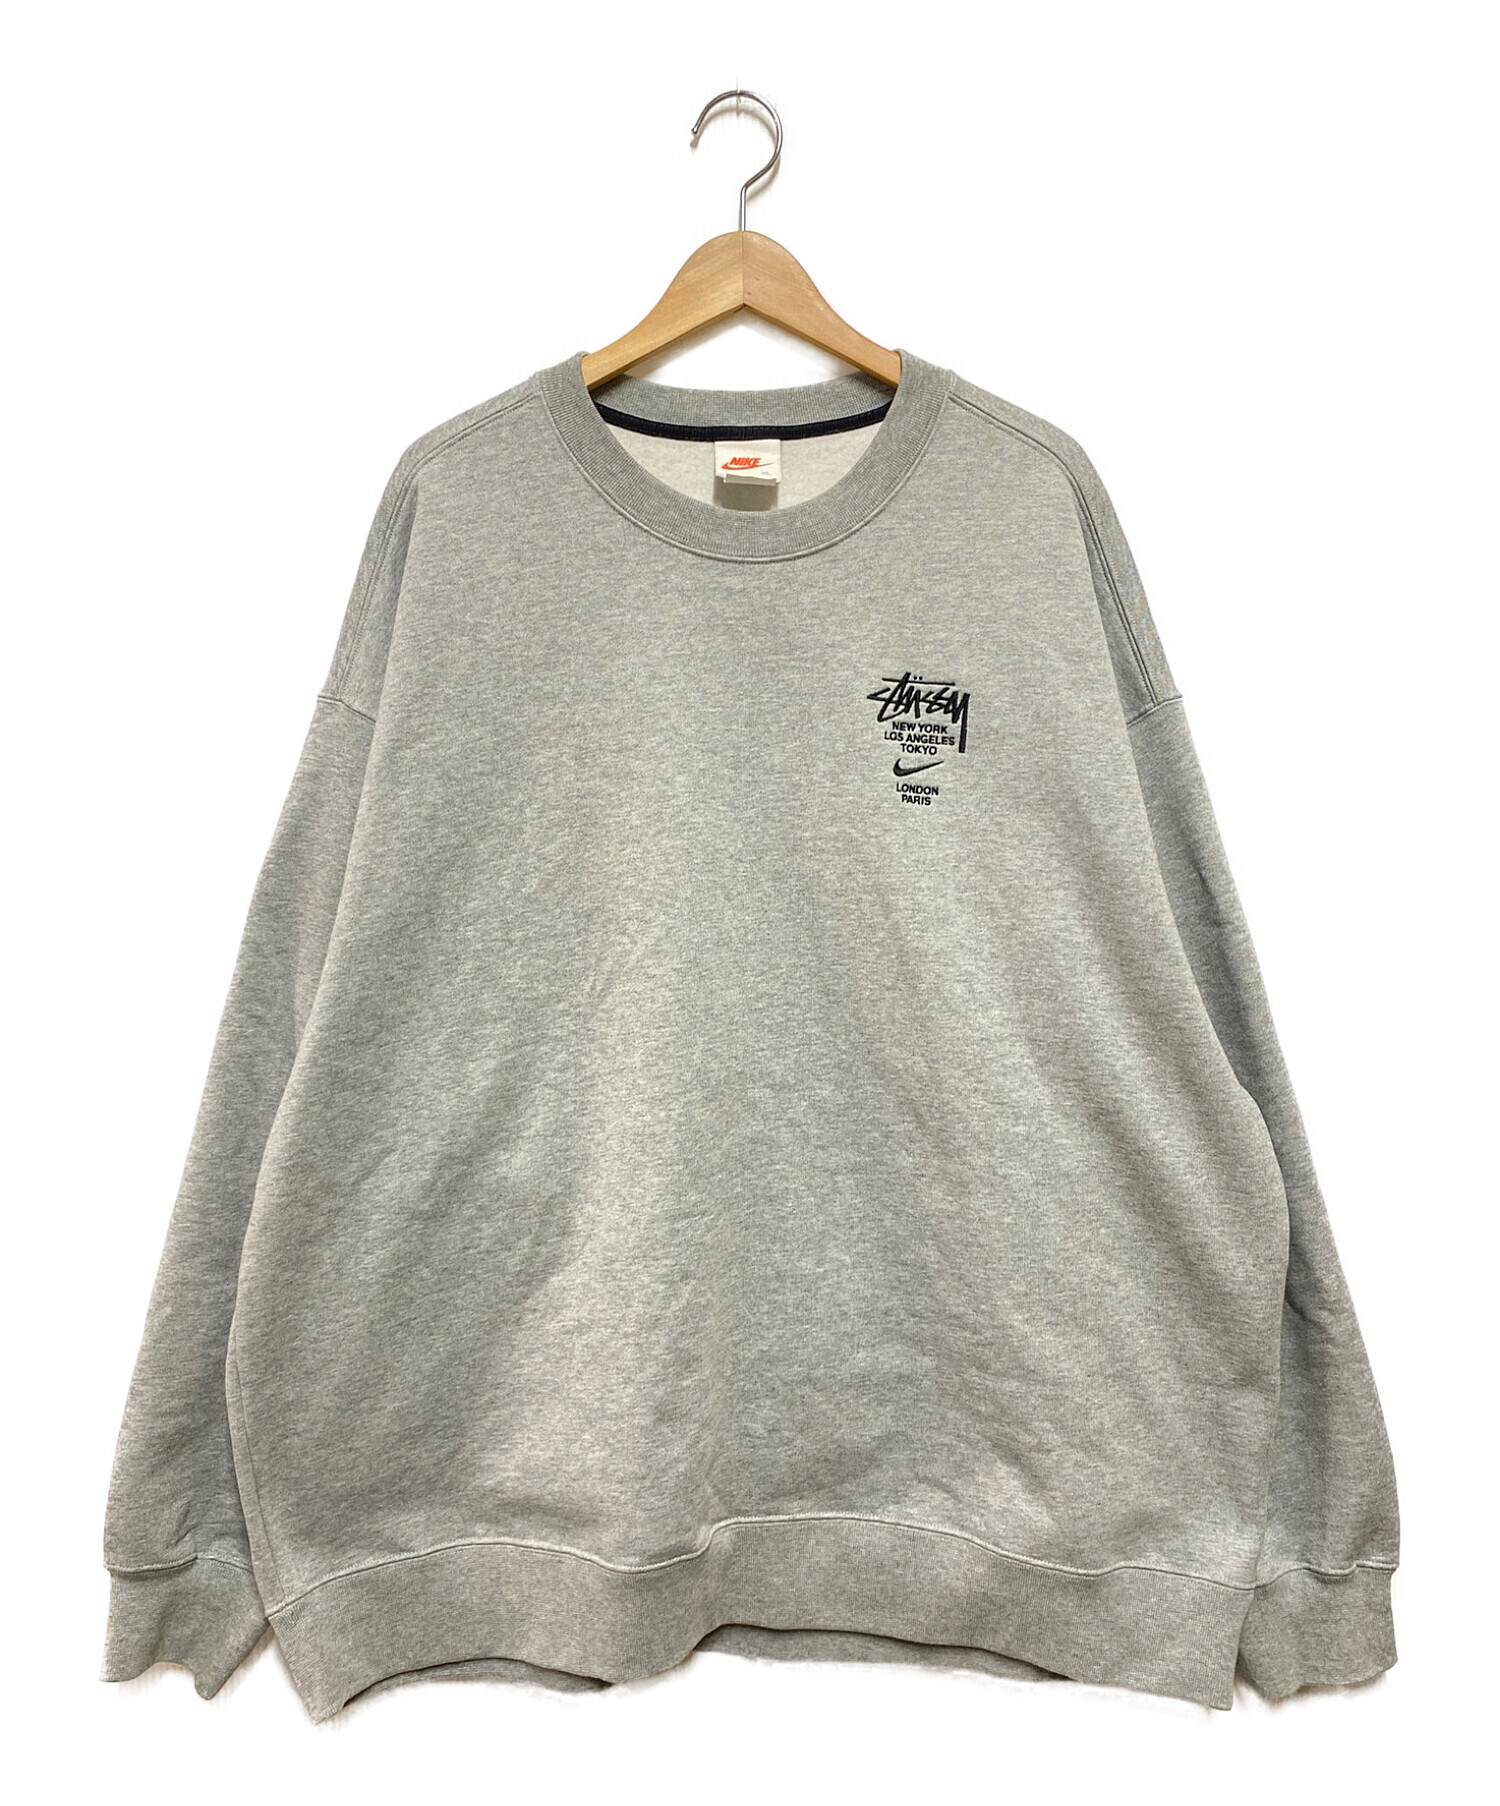 NIKE×STUSSY (ナイキ×ステューシー) Fleece Crew Sweatshirt グレー サイズ:XL